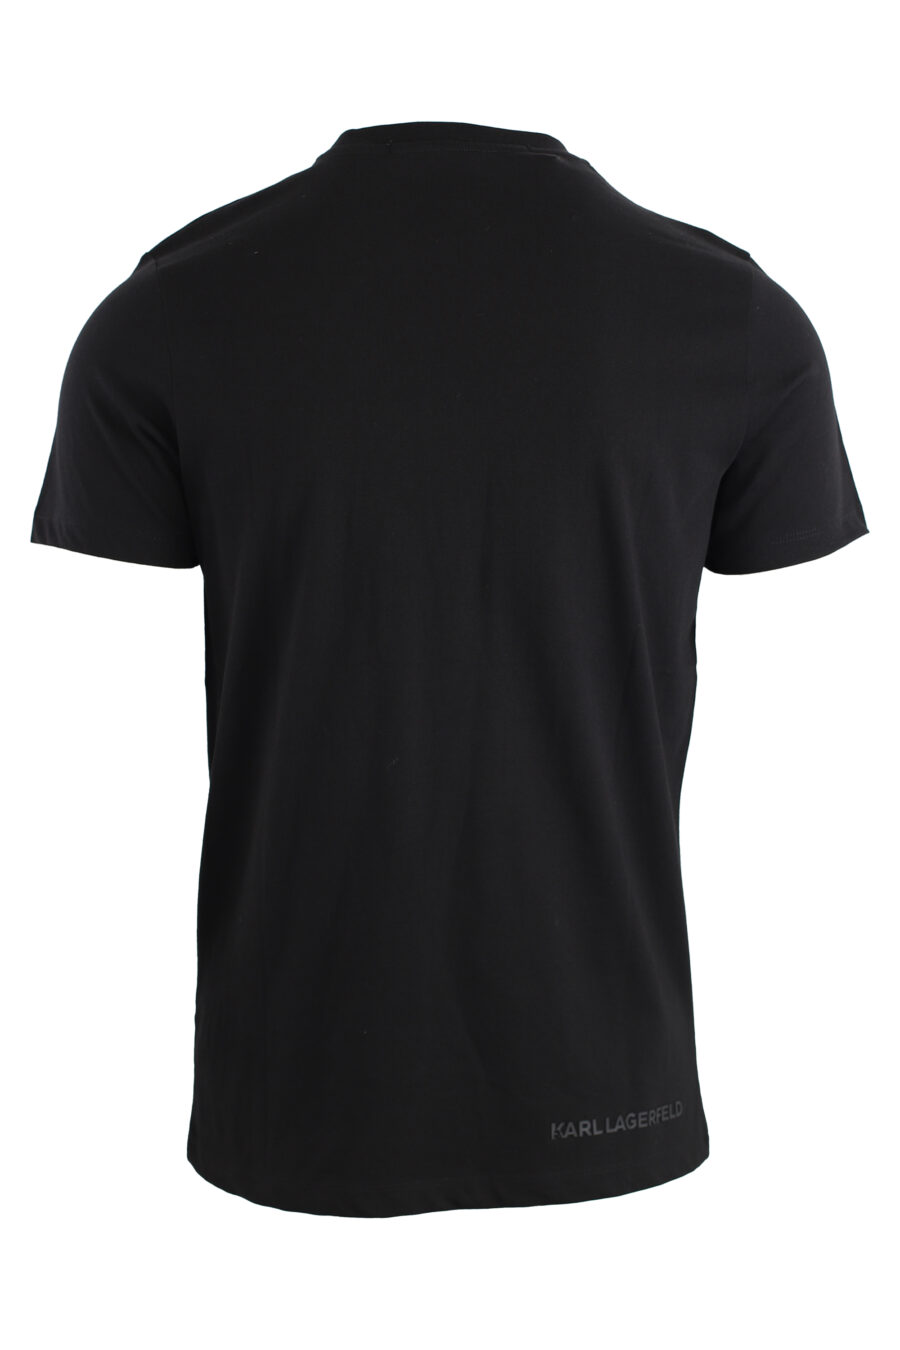 Camiseta negra con logo azul metalizado - IMG 7551